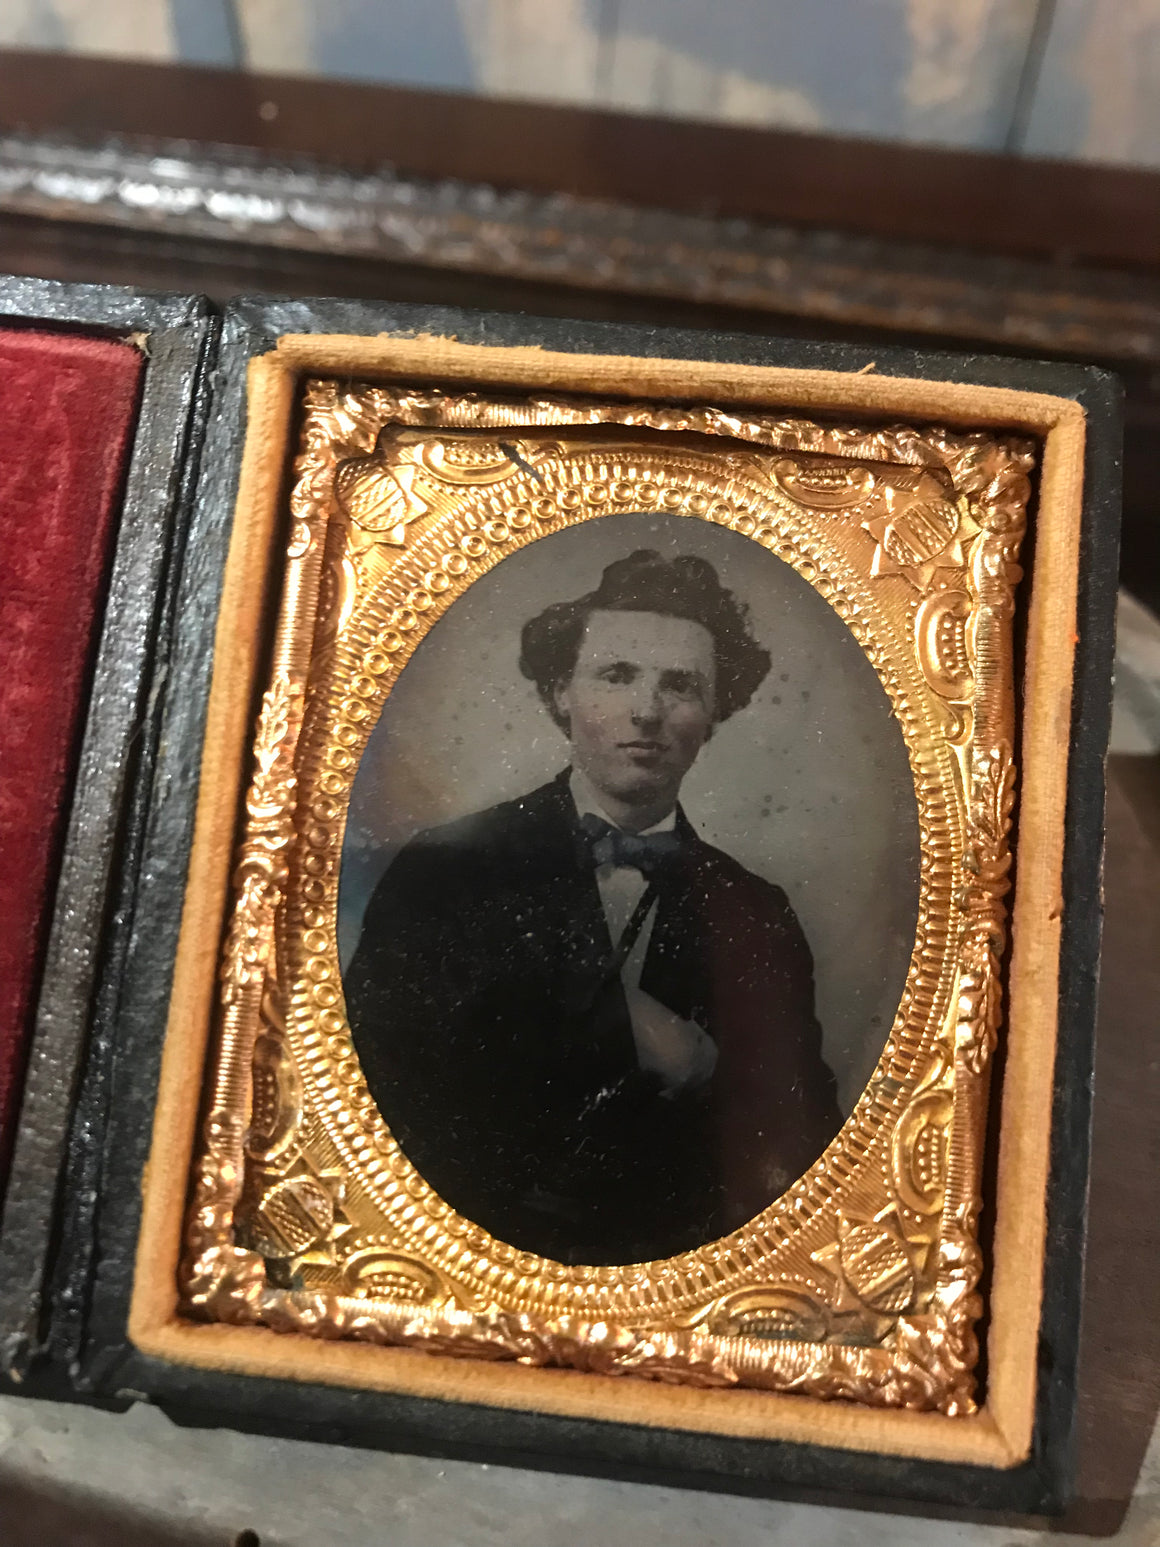 A 19th Century daguerreotype cased photograph of a gentleman